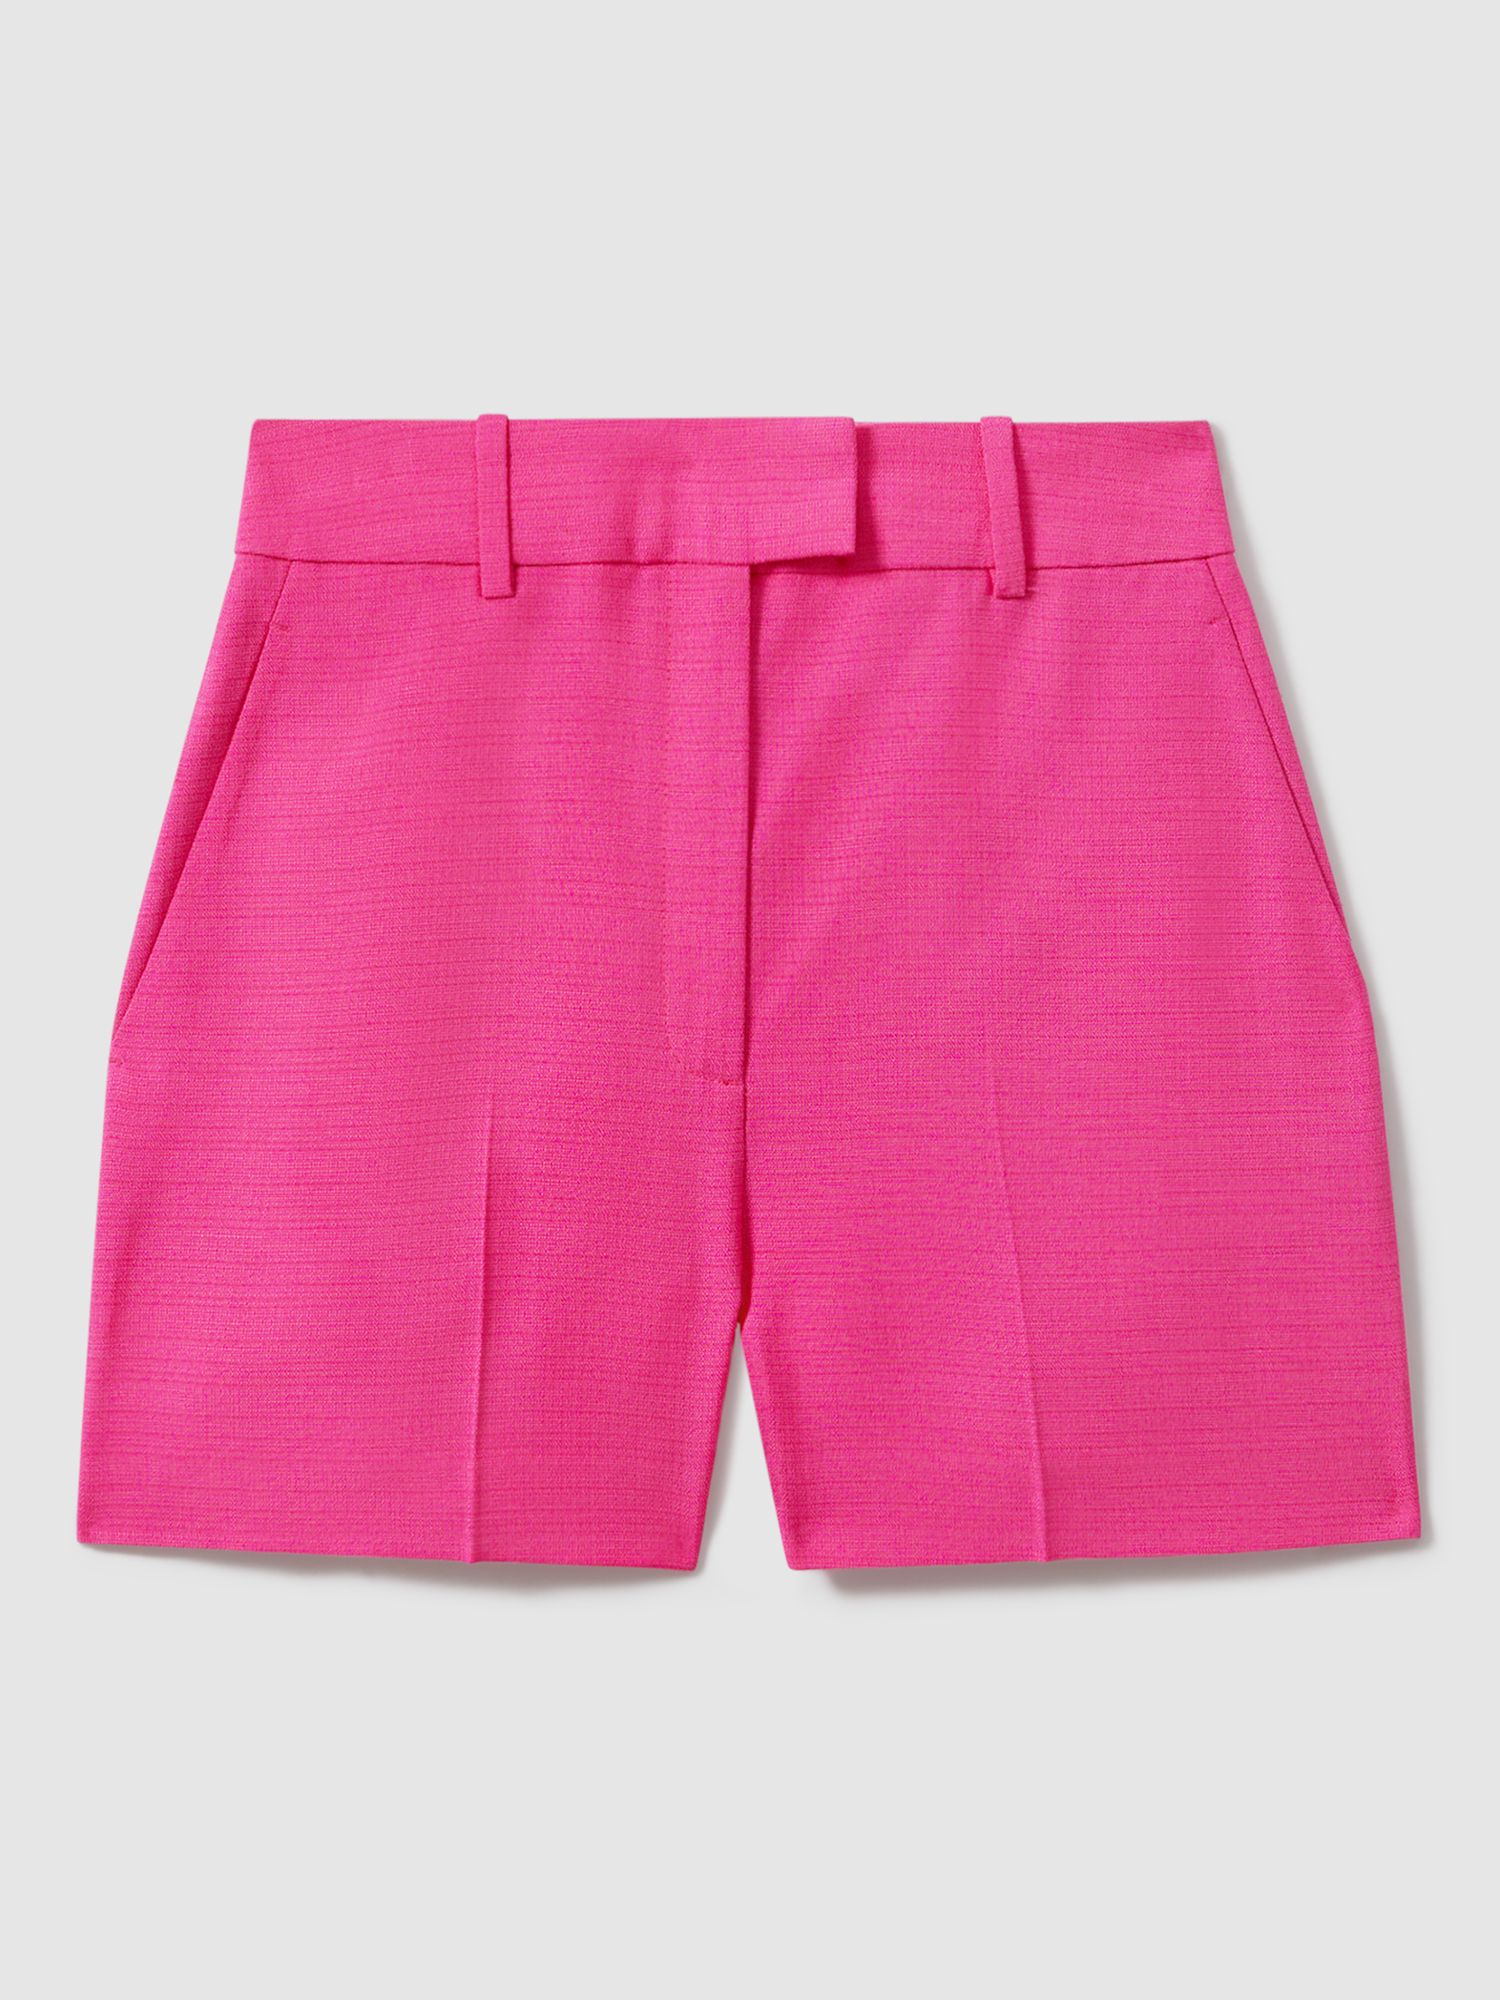 Reiss Hewey Tailored Shorts, Pink, 6